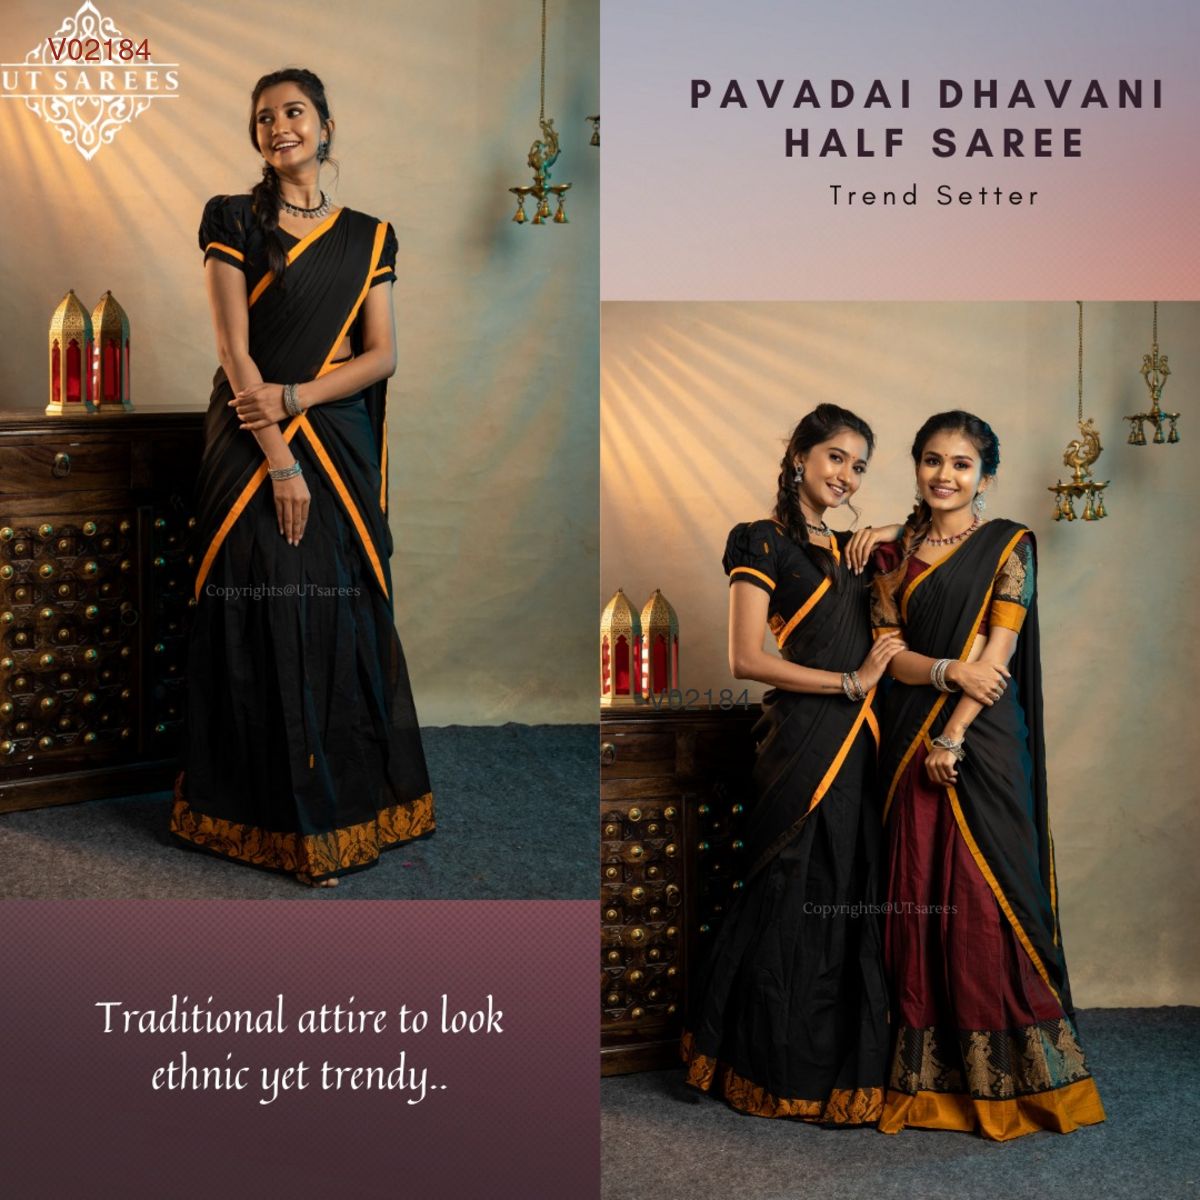 Narayanapet/Chettinad Pavadai Dhavani Half Saree - Vannamayil Fashions